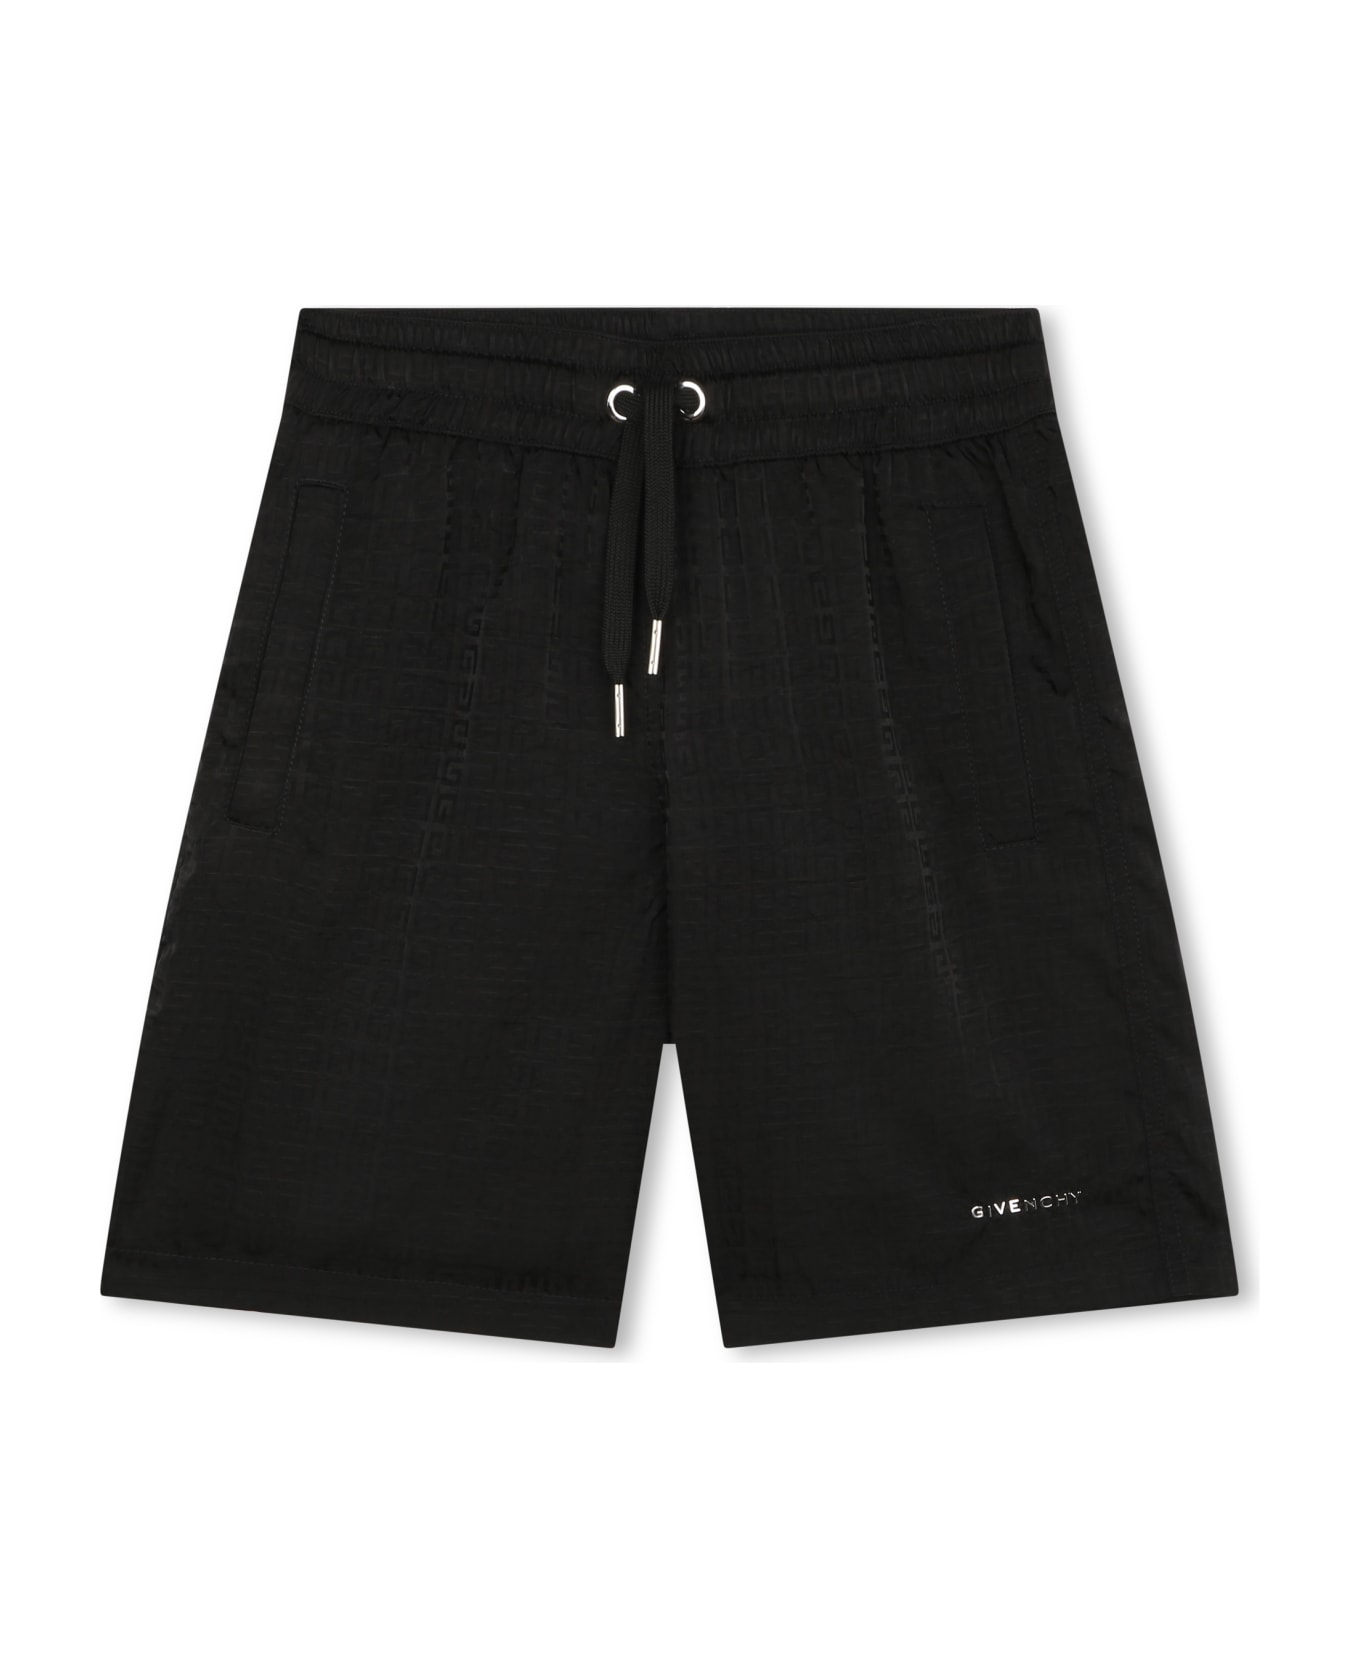 Givenchy Sports Shorts With Monogram - B Nero ボトムス